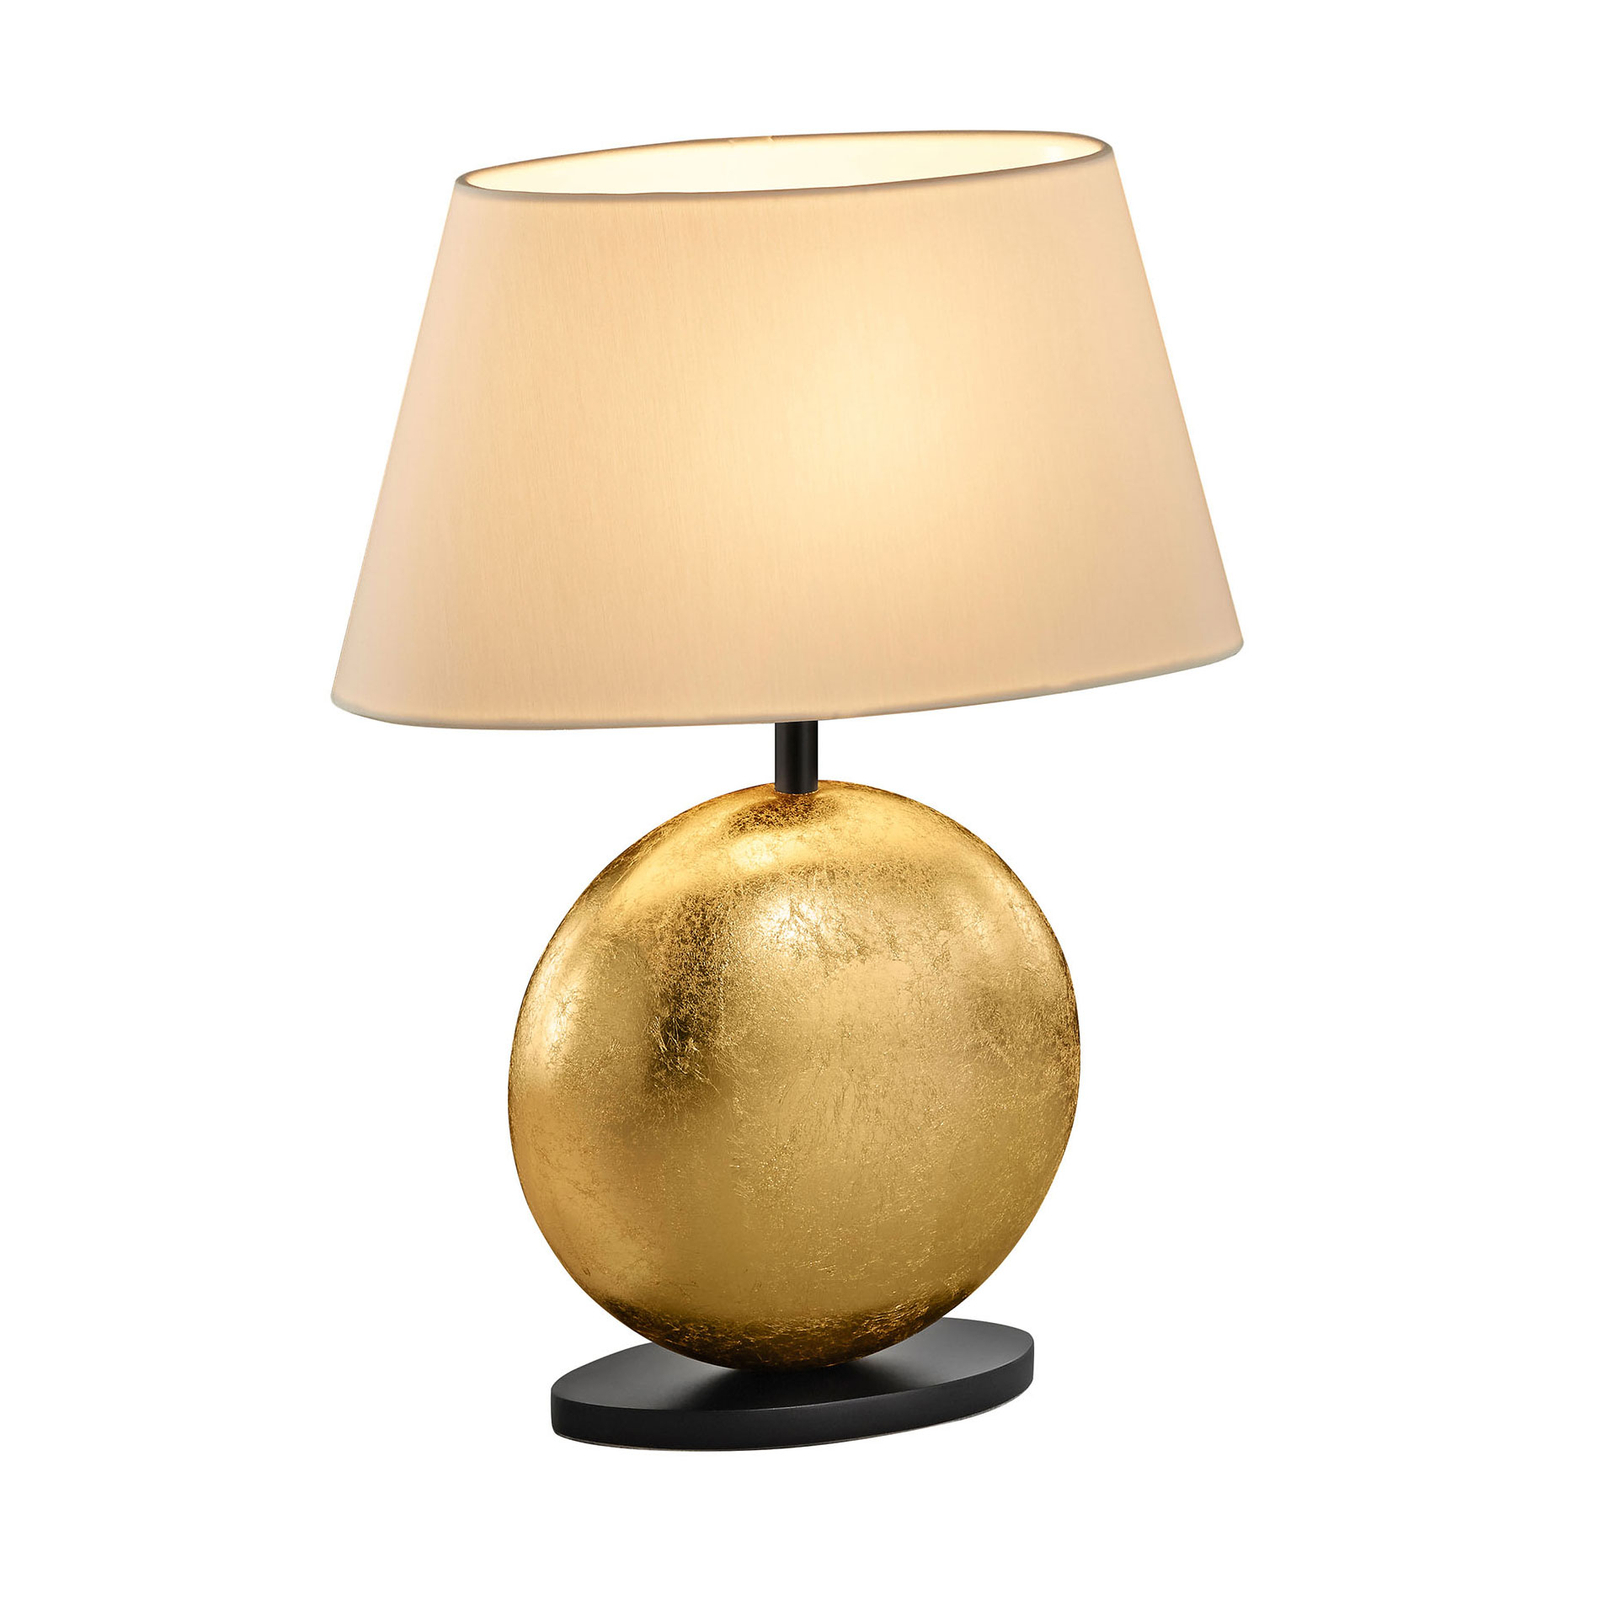 BANKAMP Mali table lamp, cream/gold, height 41 cm